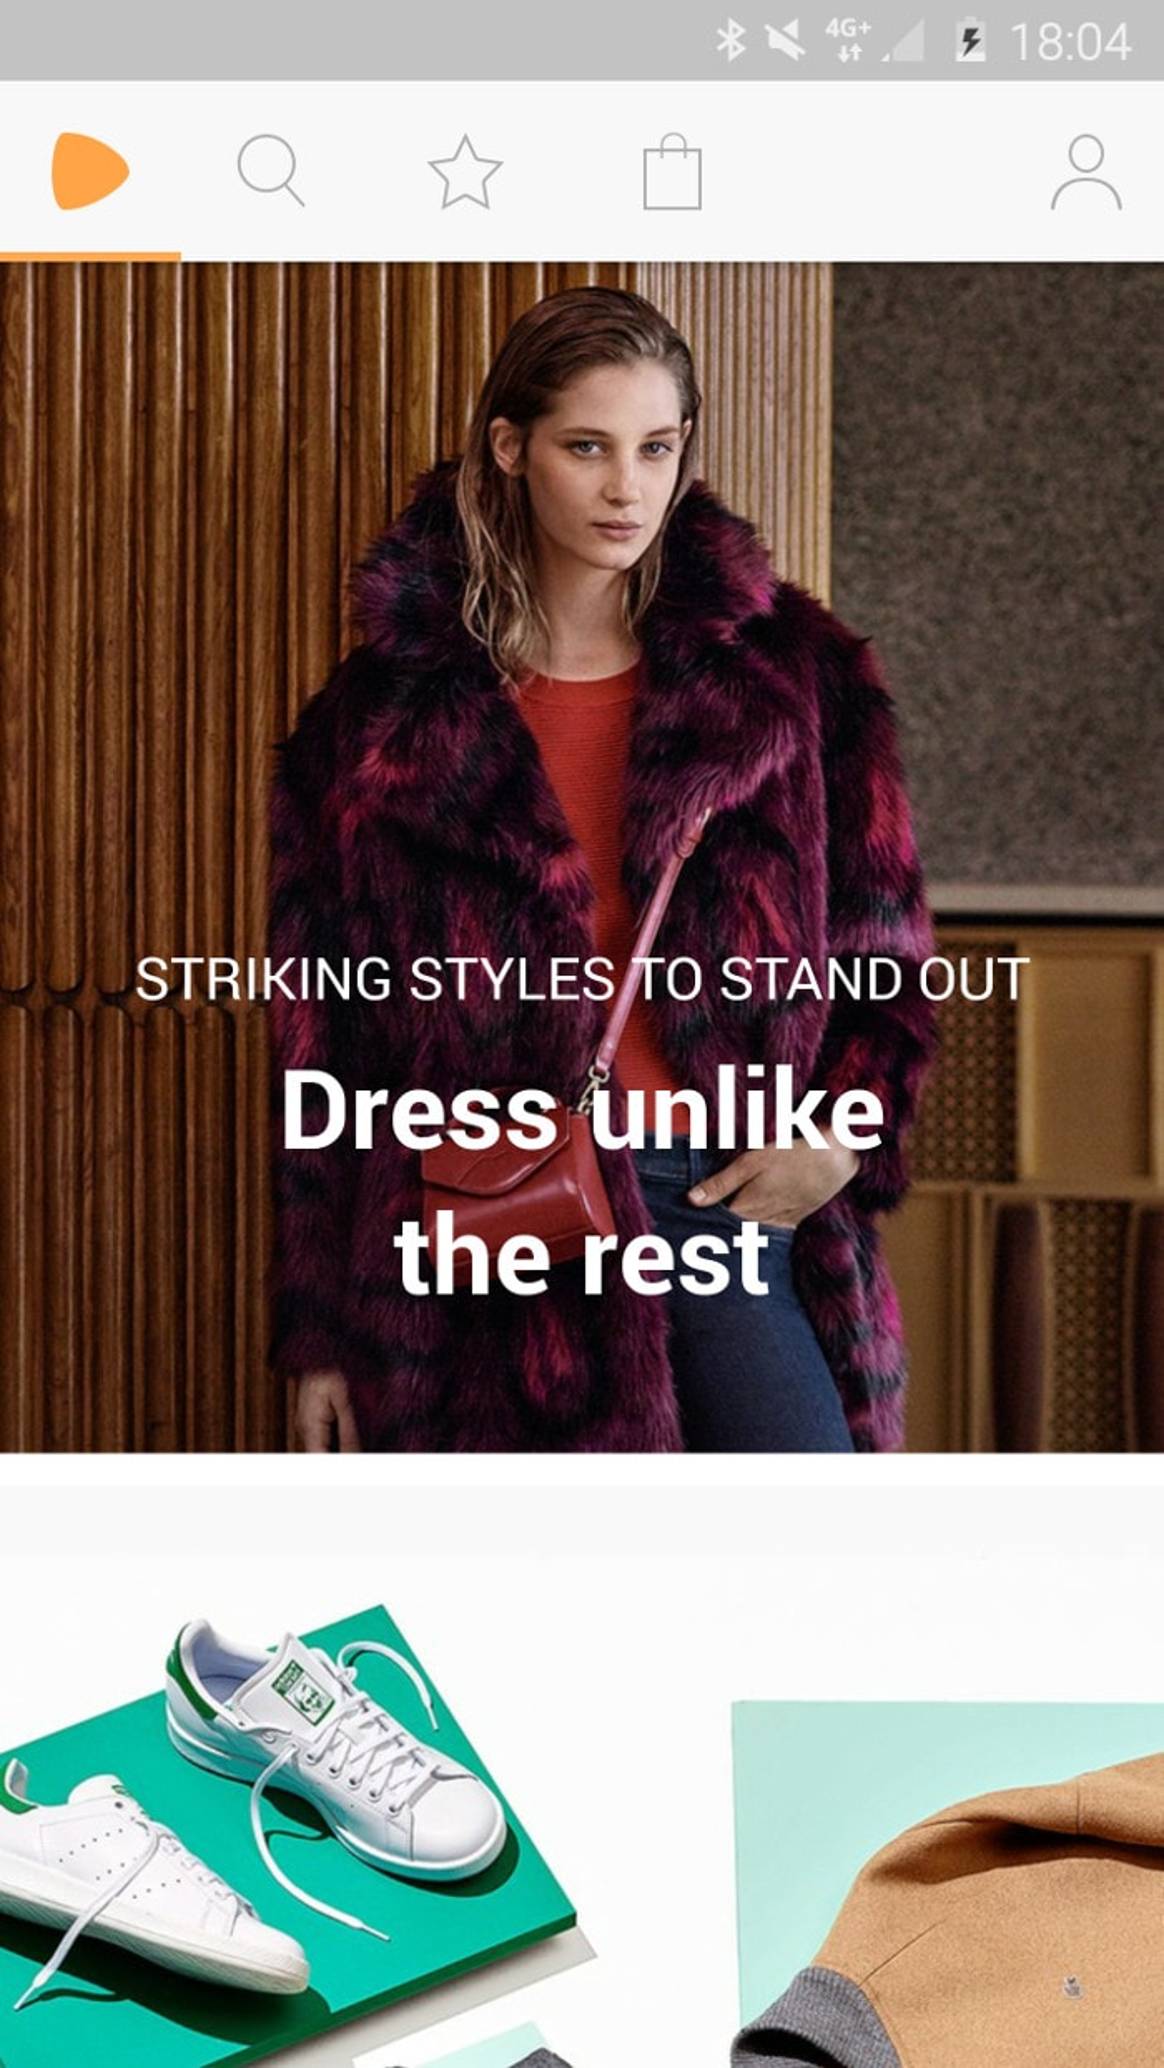 Zalando launches updated fashion app